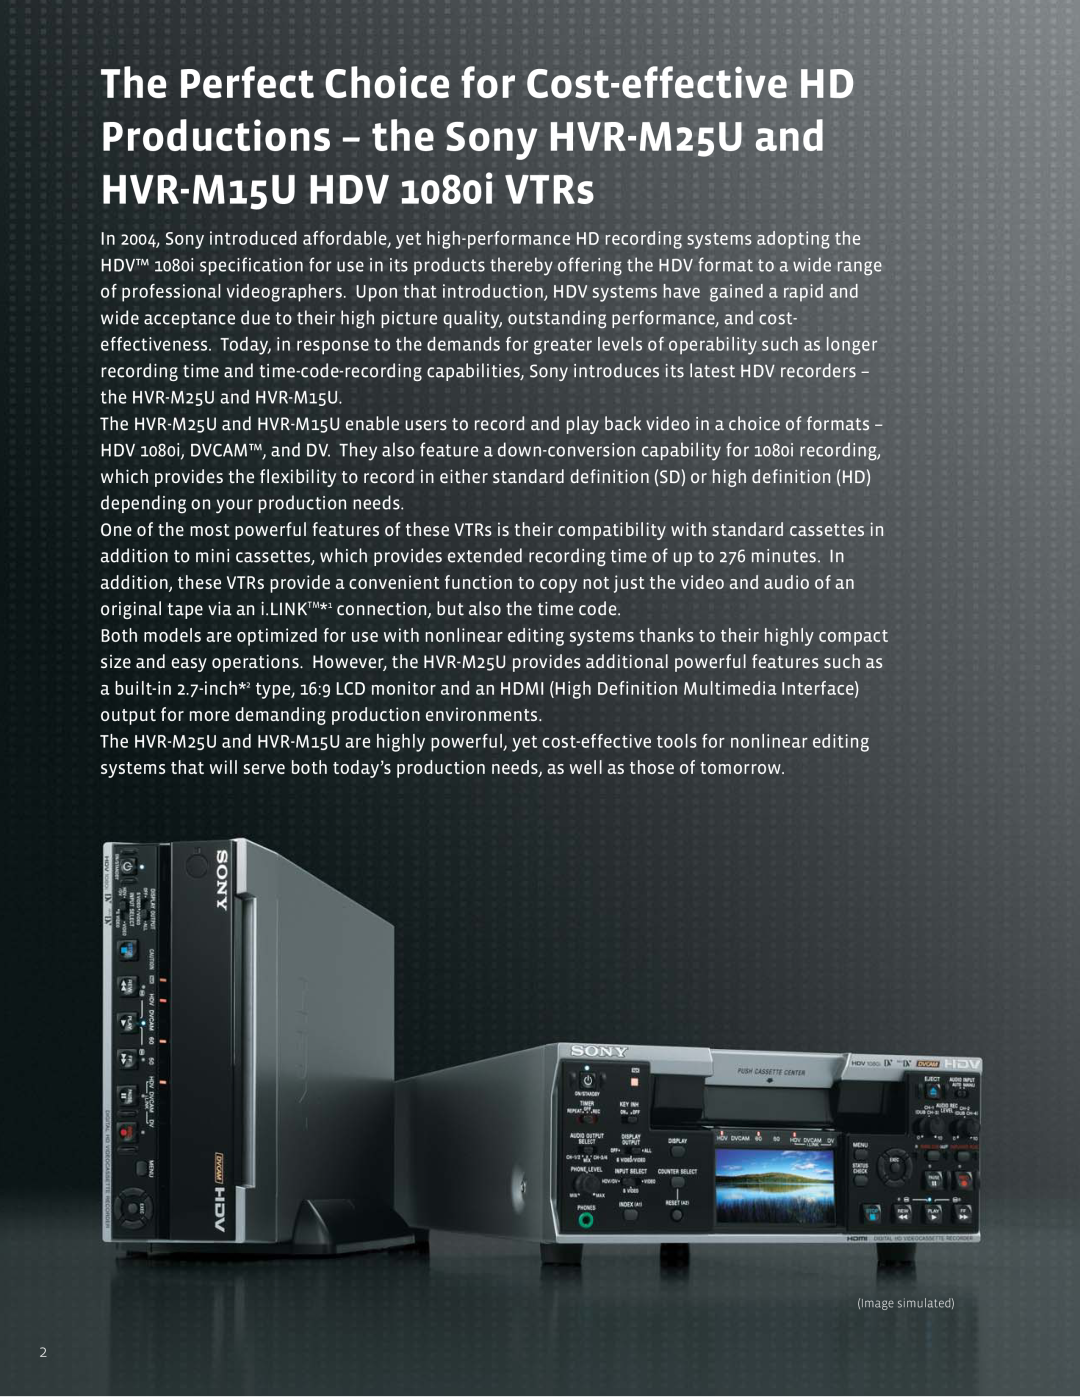 Sony HVR-M25U manual Image simulated 